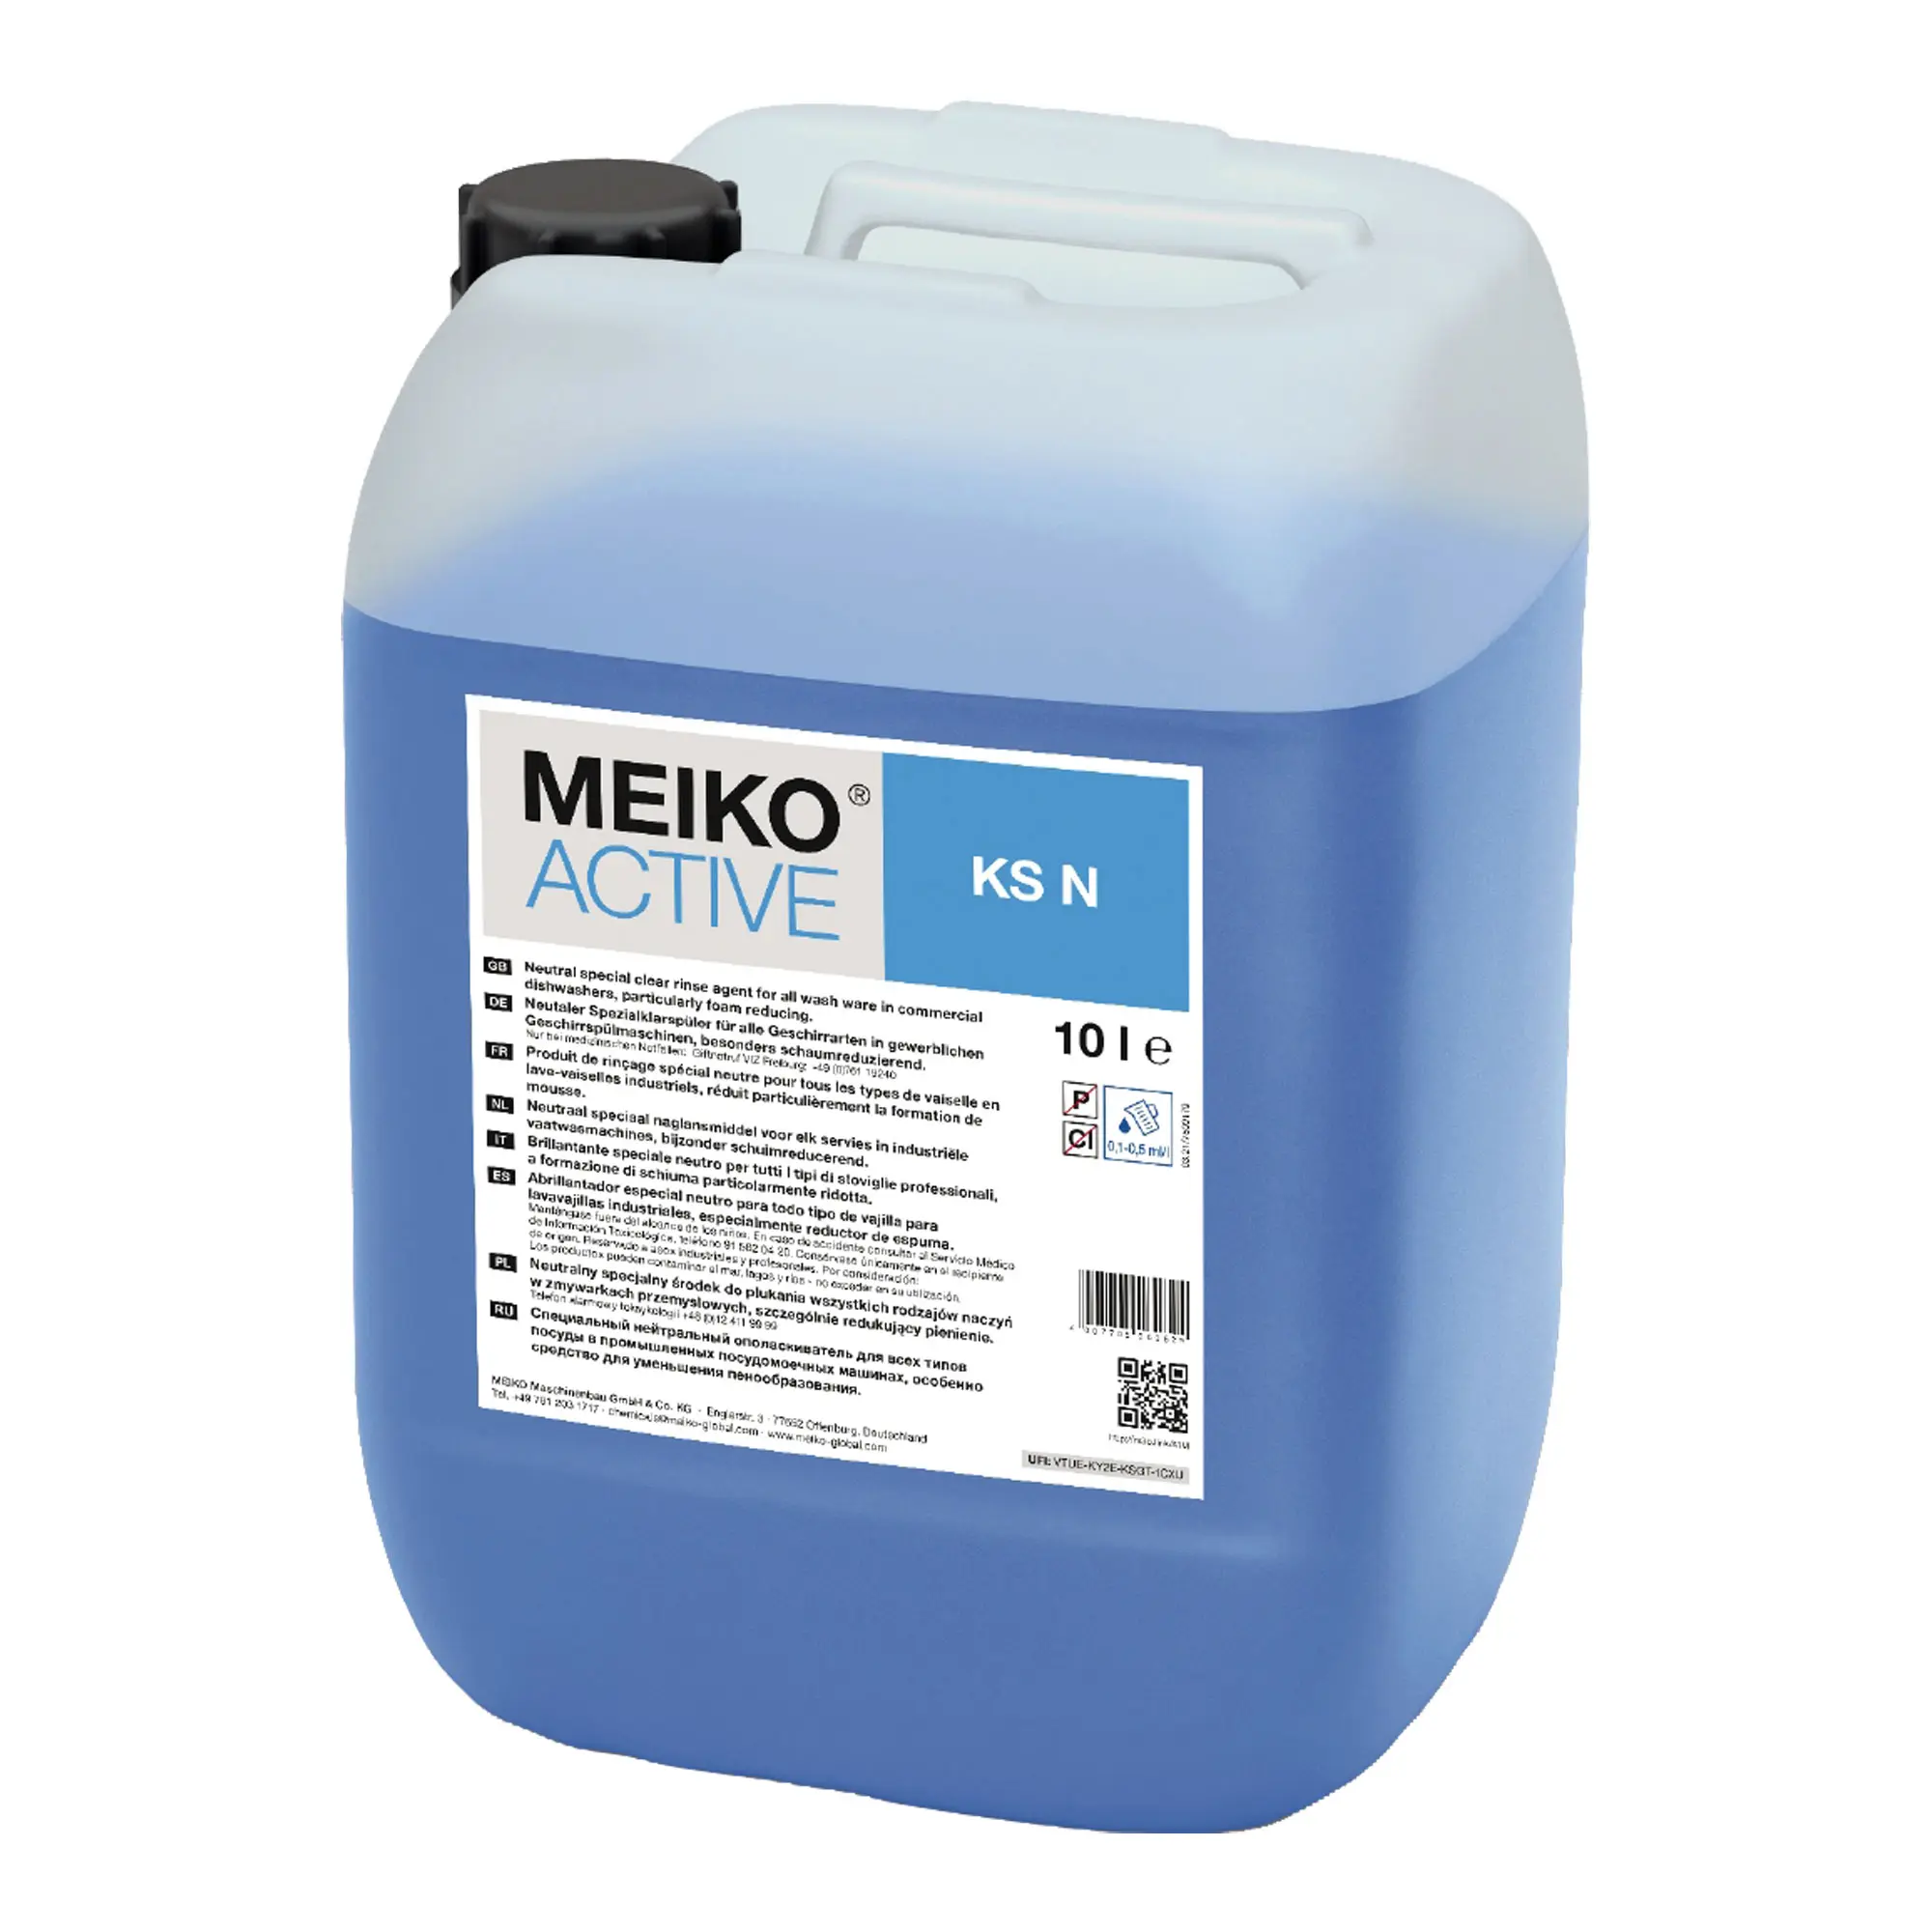 Meiko Active KS N neutraler Universal-Klarspüler